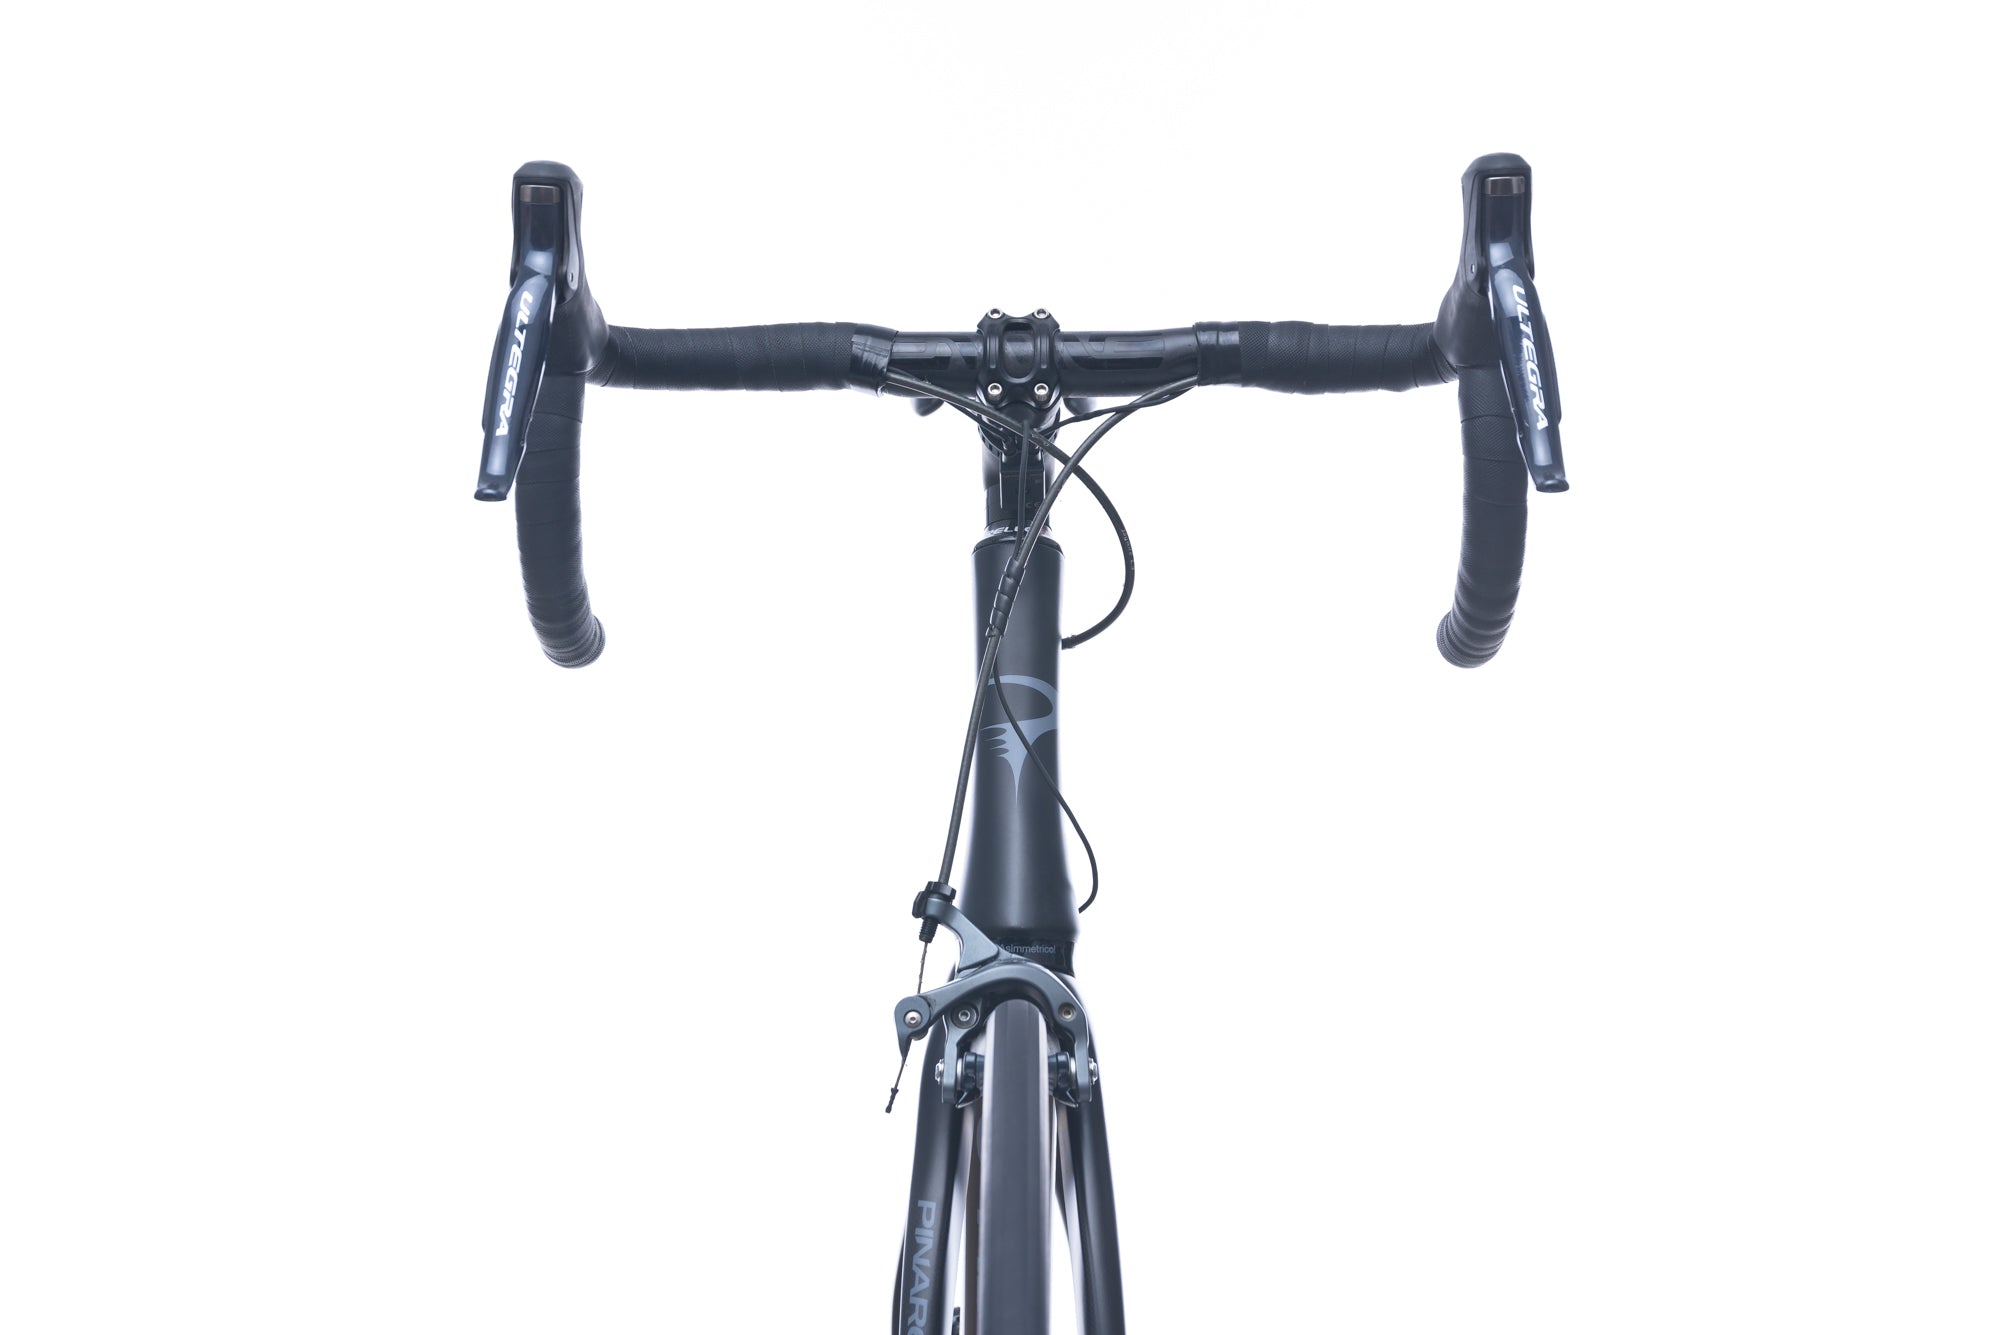 Pinarello Dogma 65.1 Think 2 59.5cm Bike - 2013 front wheel